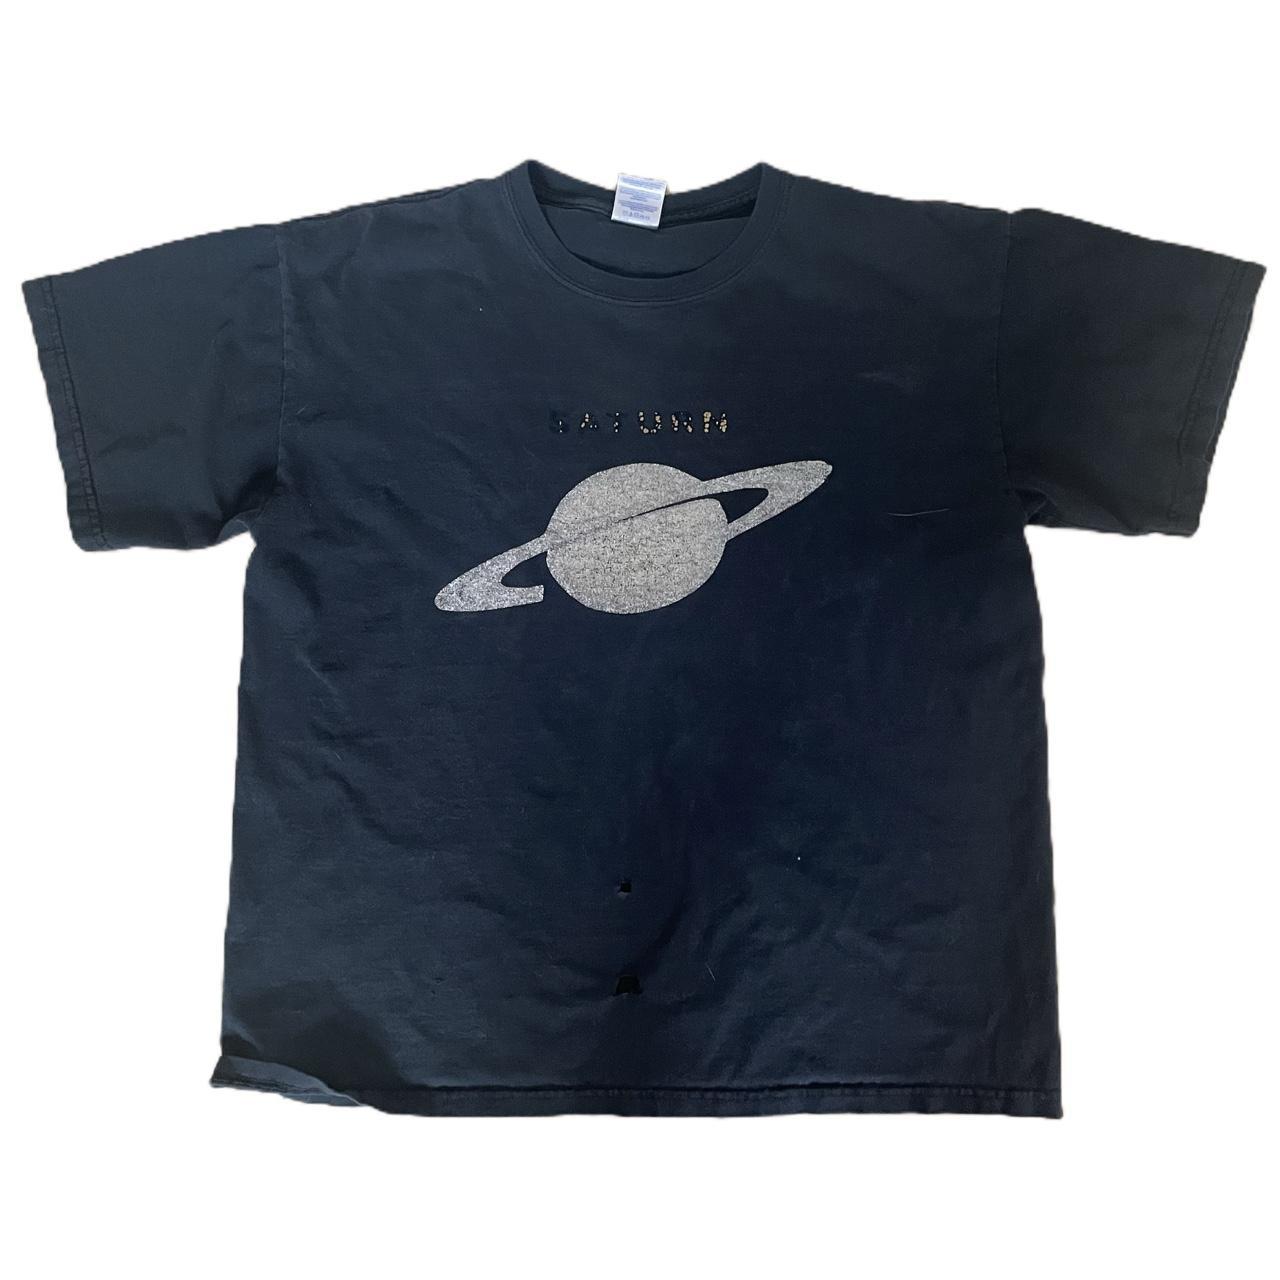 Saturn printed t-shirt Size Large Gildan Has two... - Depop